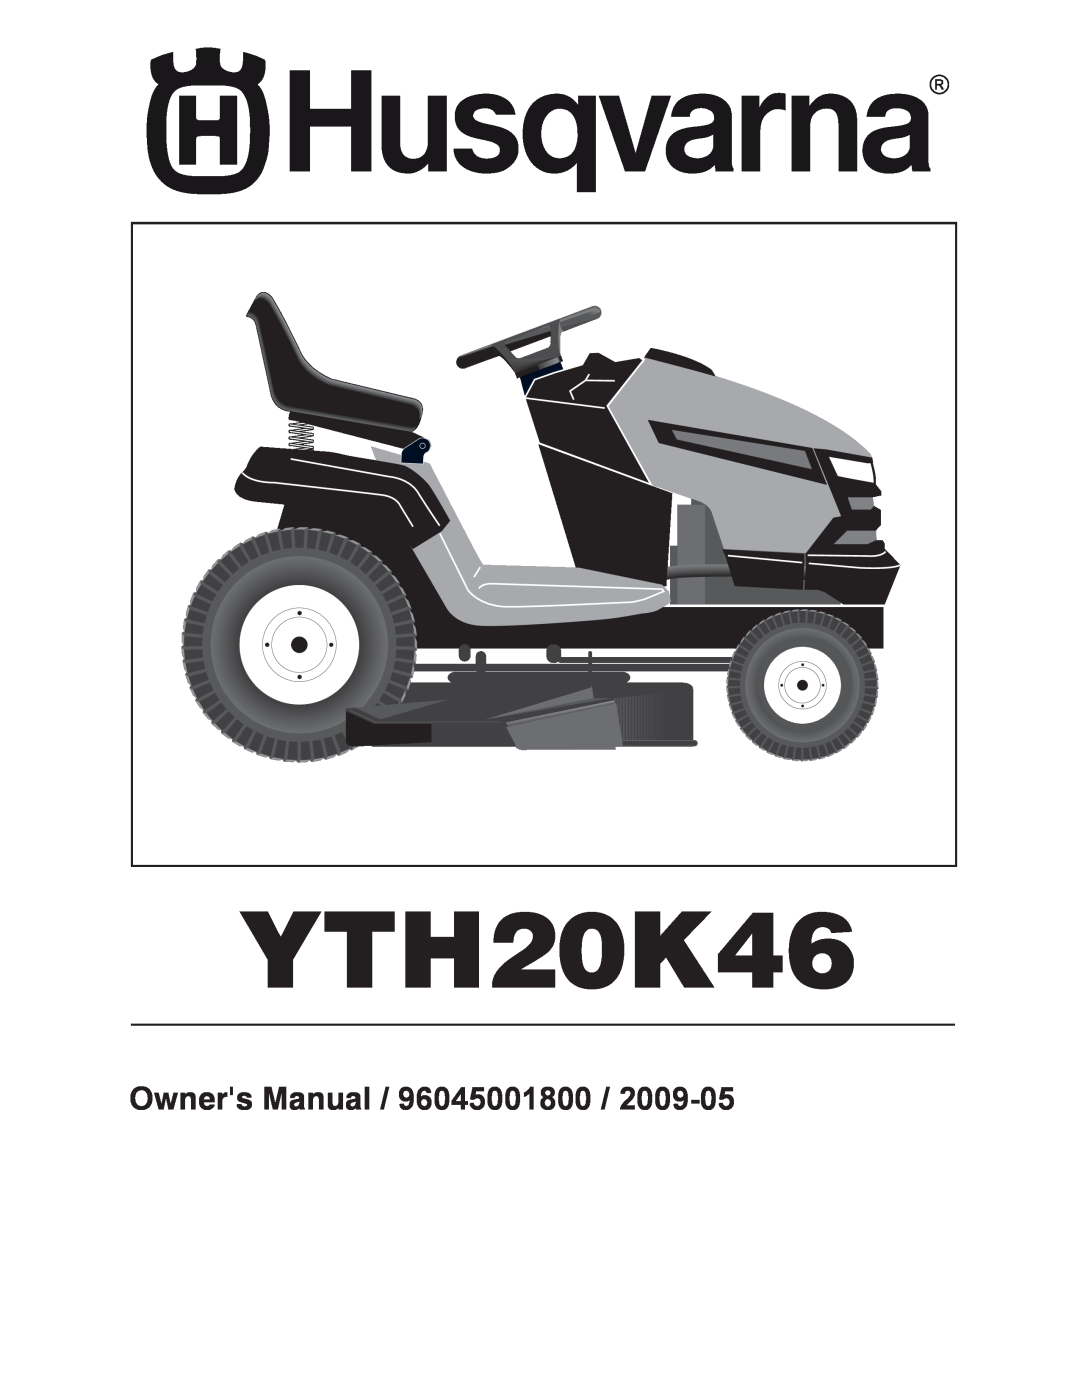 Husqvarna 532 42 57-62, 96045001800 owner manual YTH20K46 